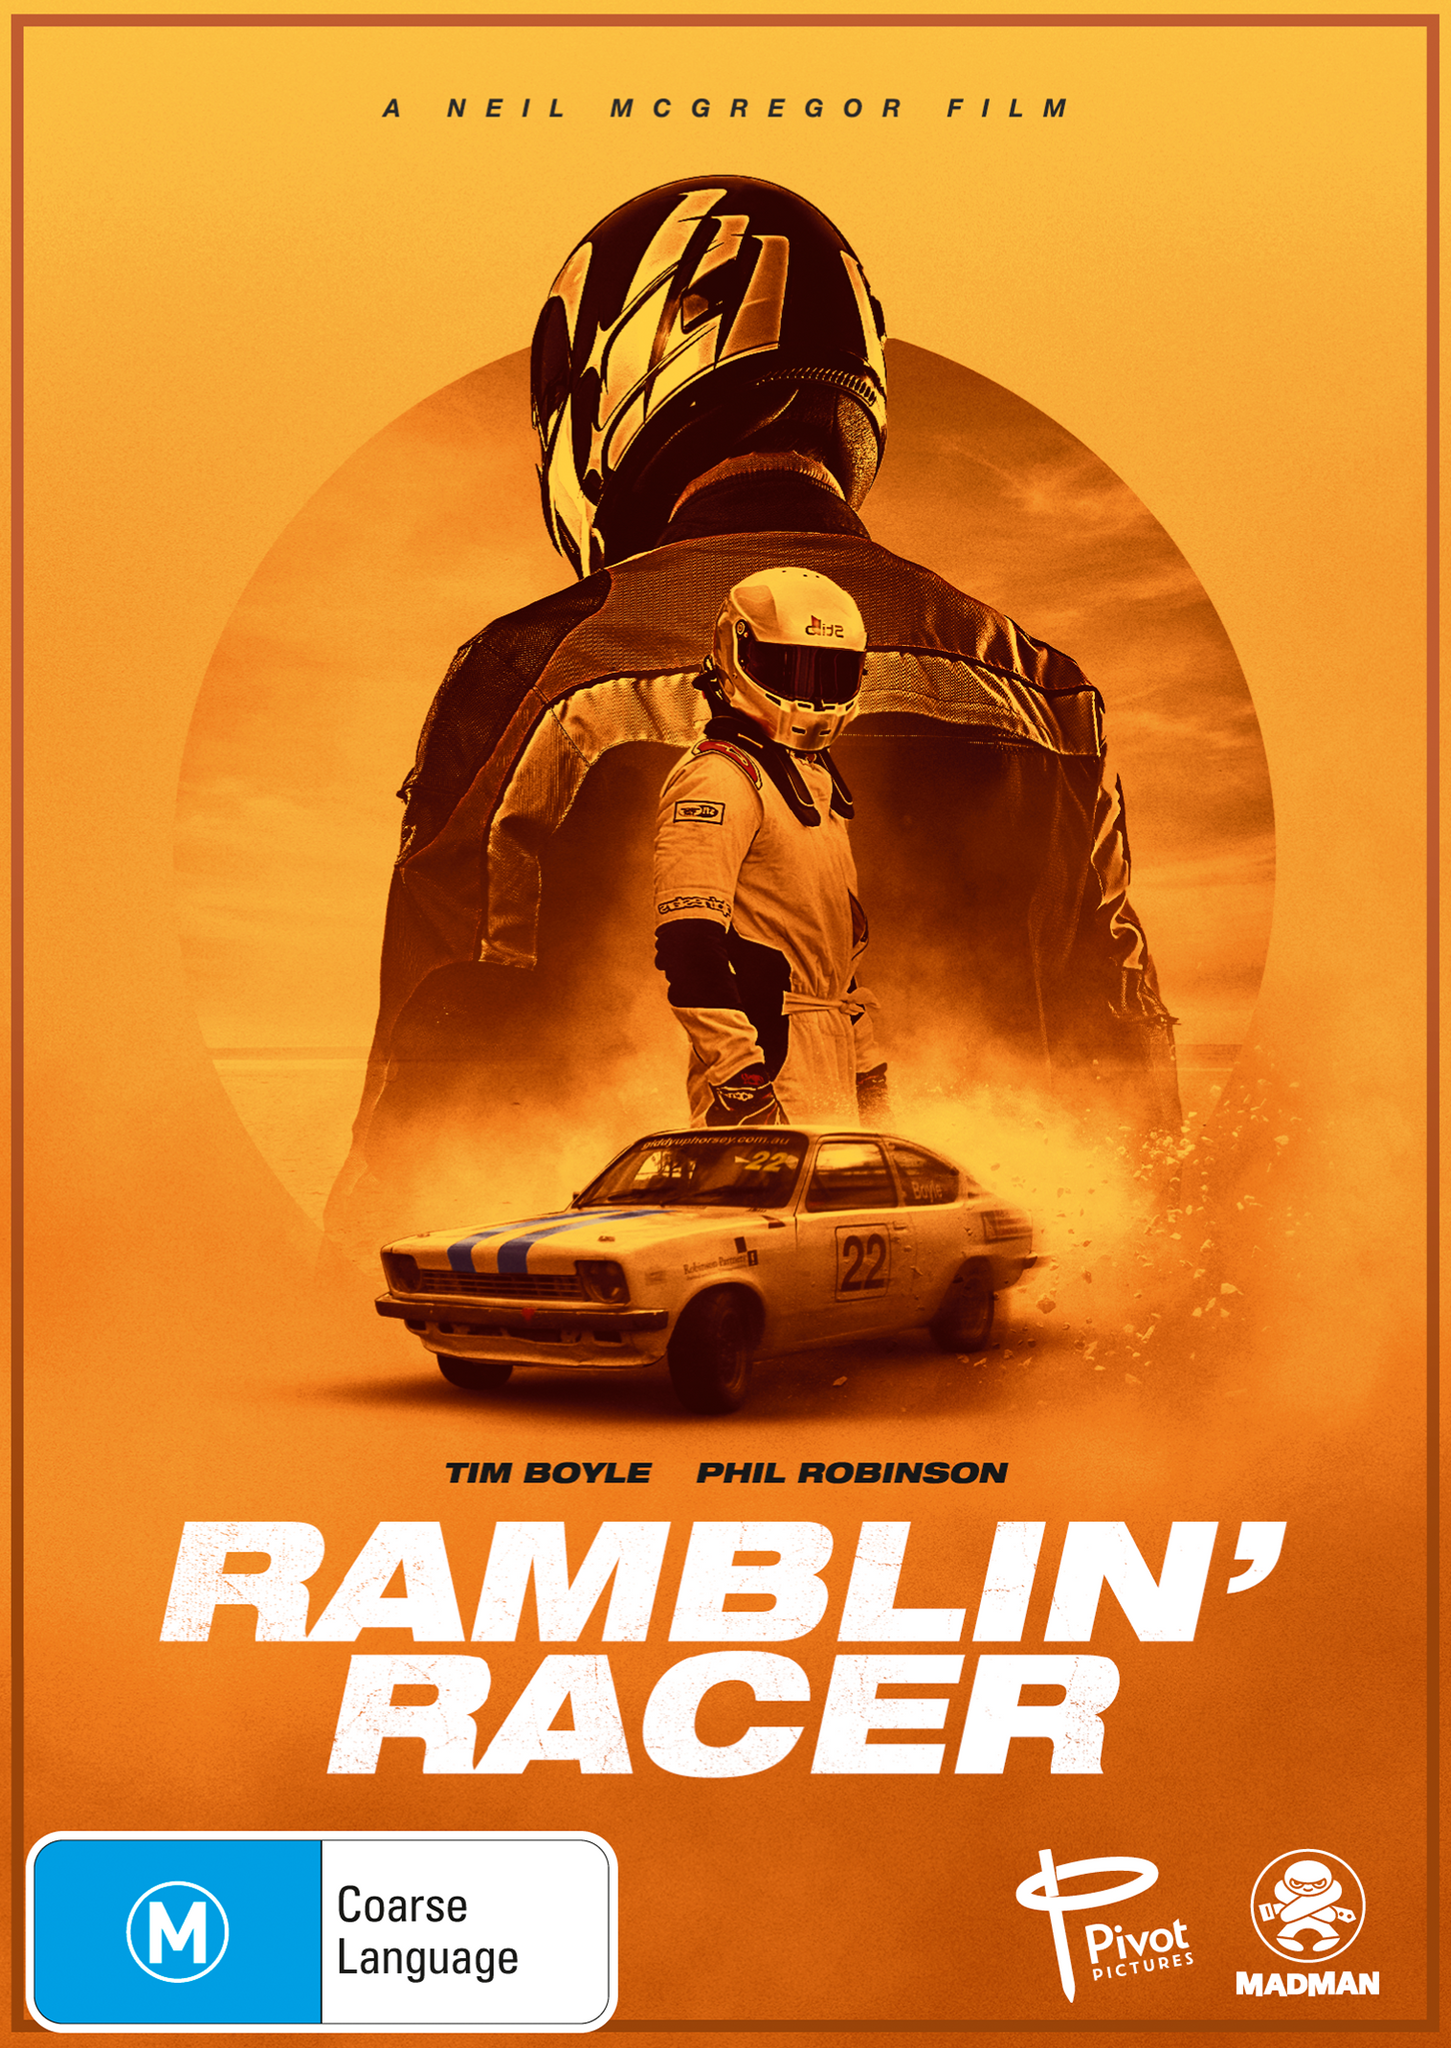 RAMBLIN' RACER